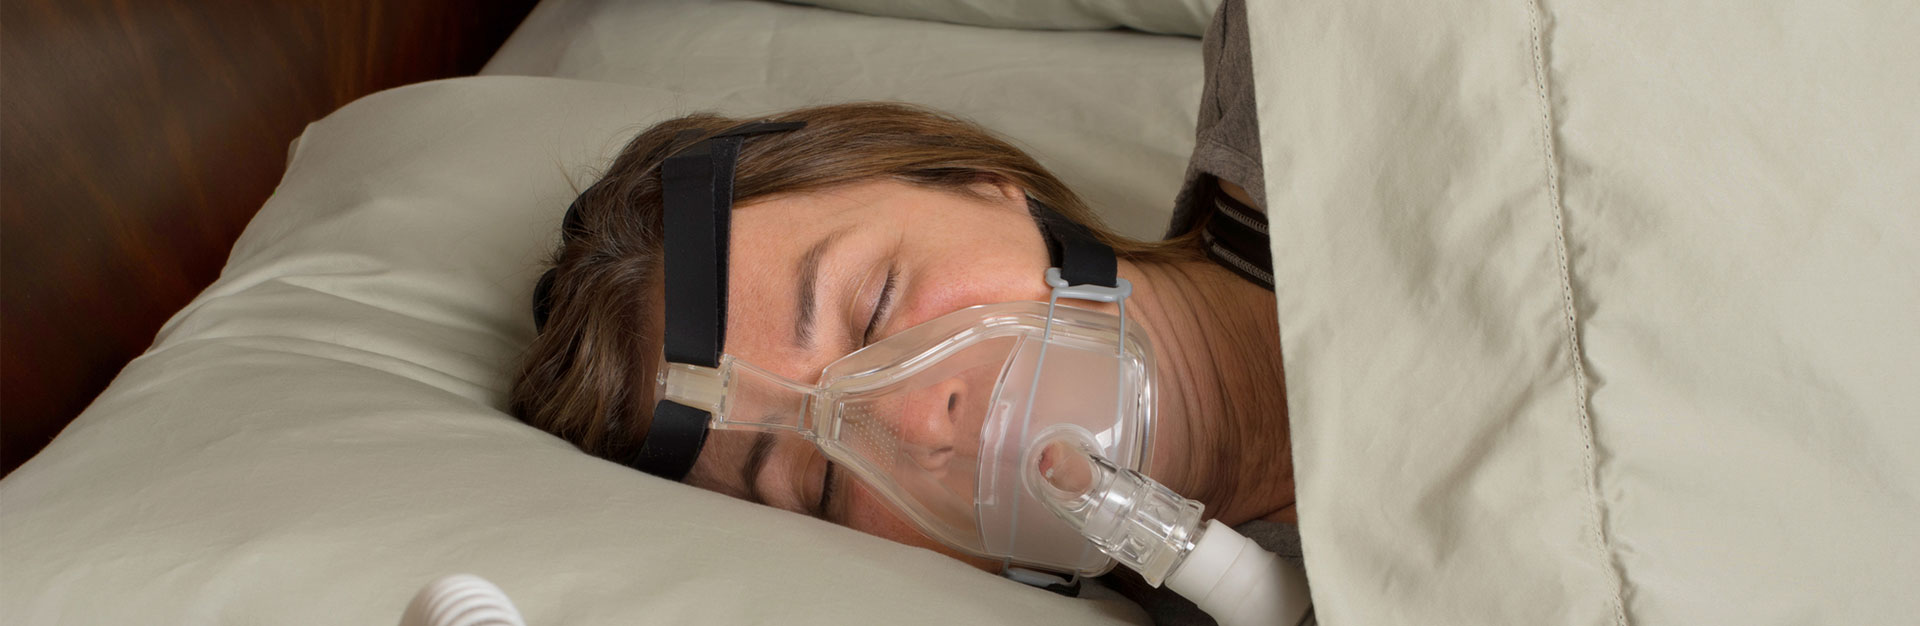 A woman is having sleep apnea treatment